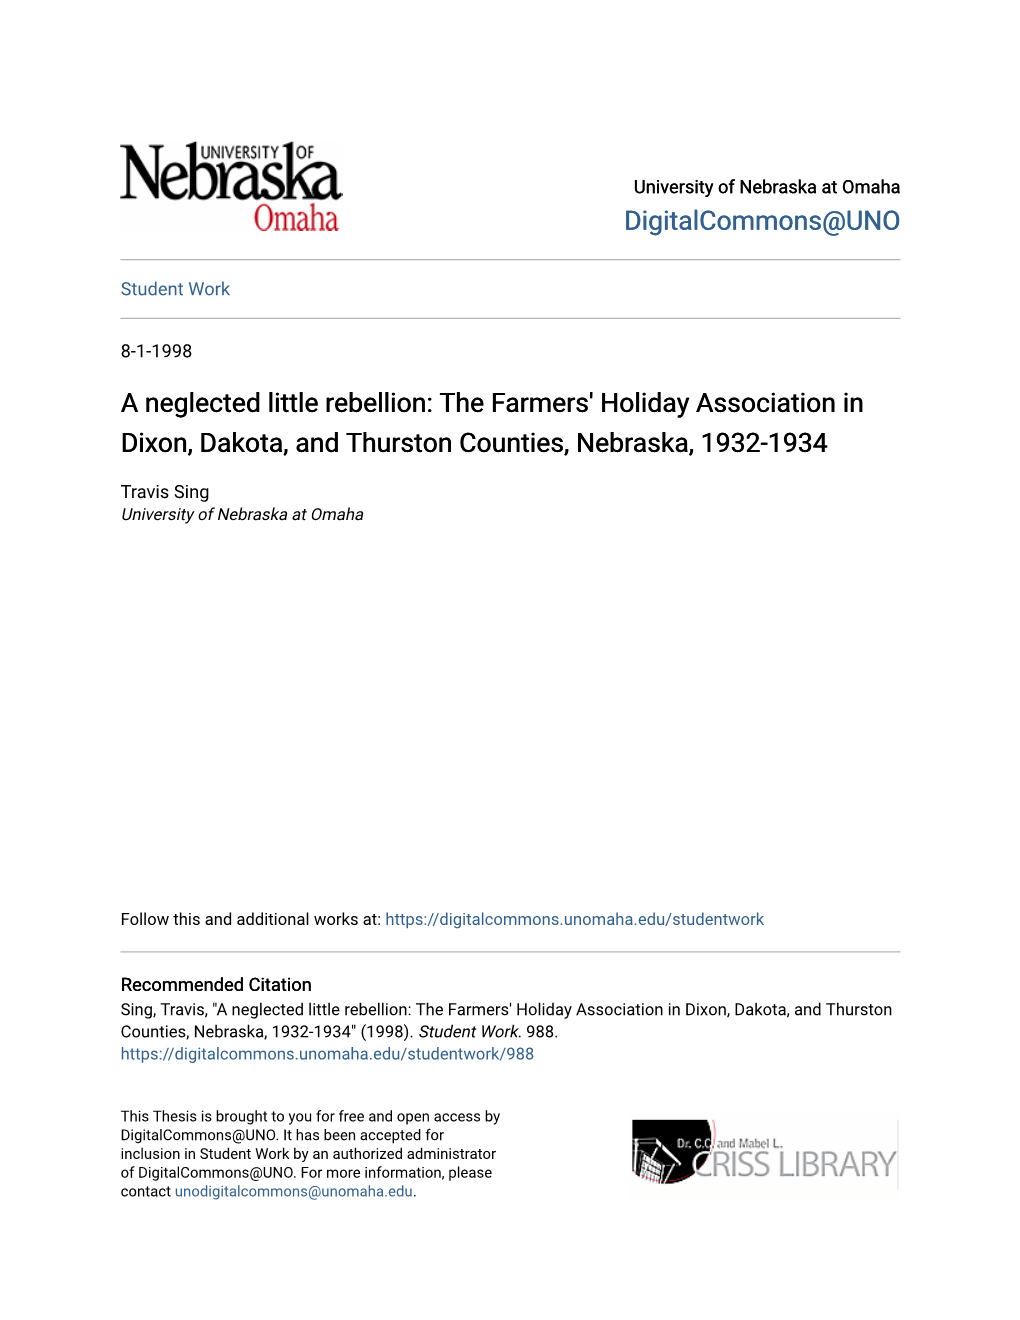 The Farmers' Holiday Association in Dixon, Dakota, and Thurston Counties, Nebraska, 1932-1934